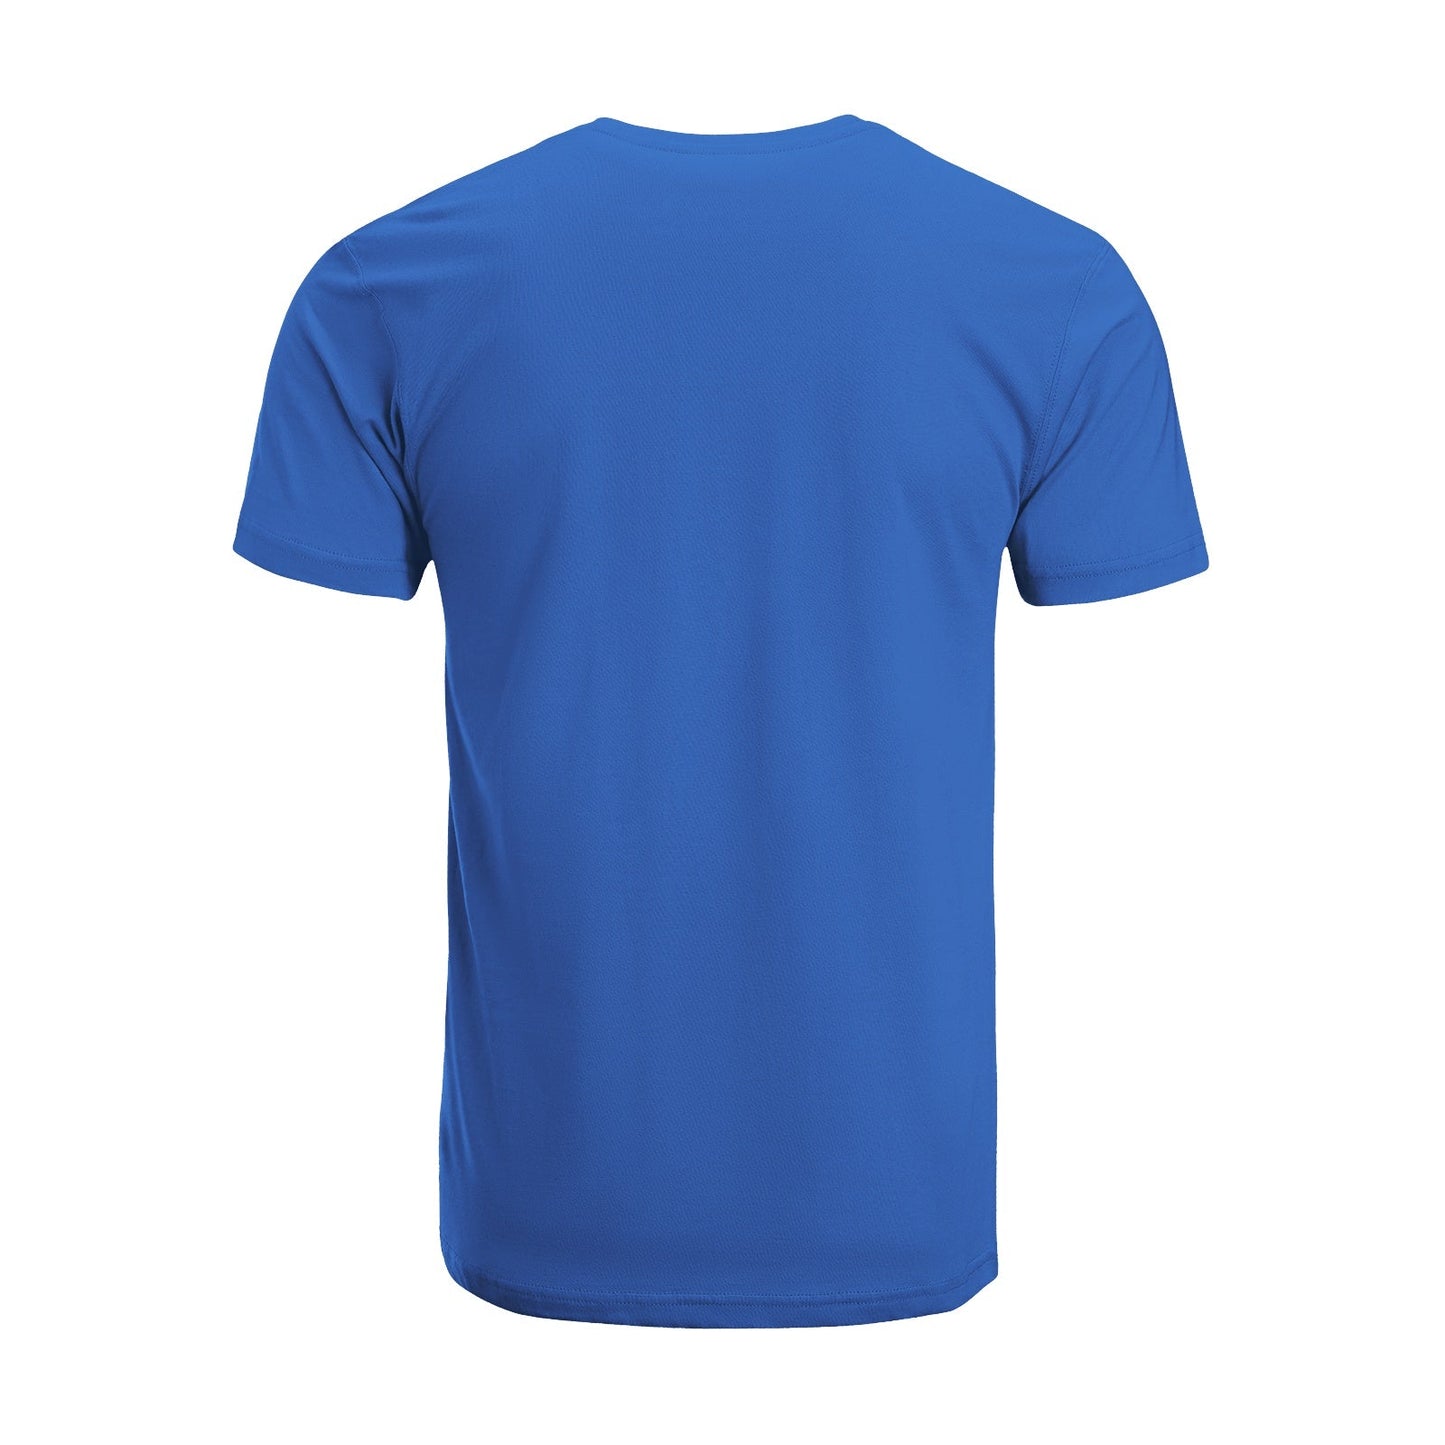 Unisex Short Sleeve Crew Neck Cotton Jersey T-Shirt Gym No. 34 - Tara-Outfits.com